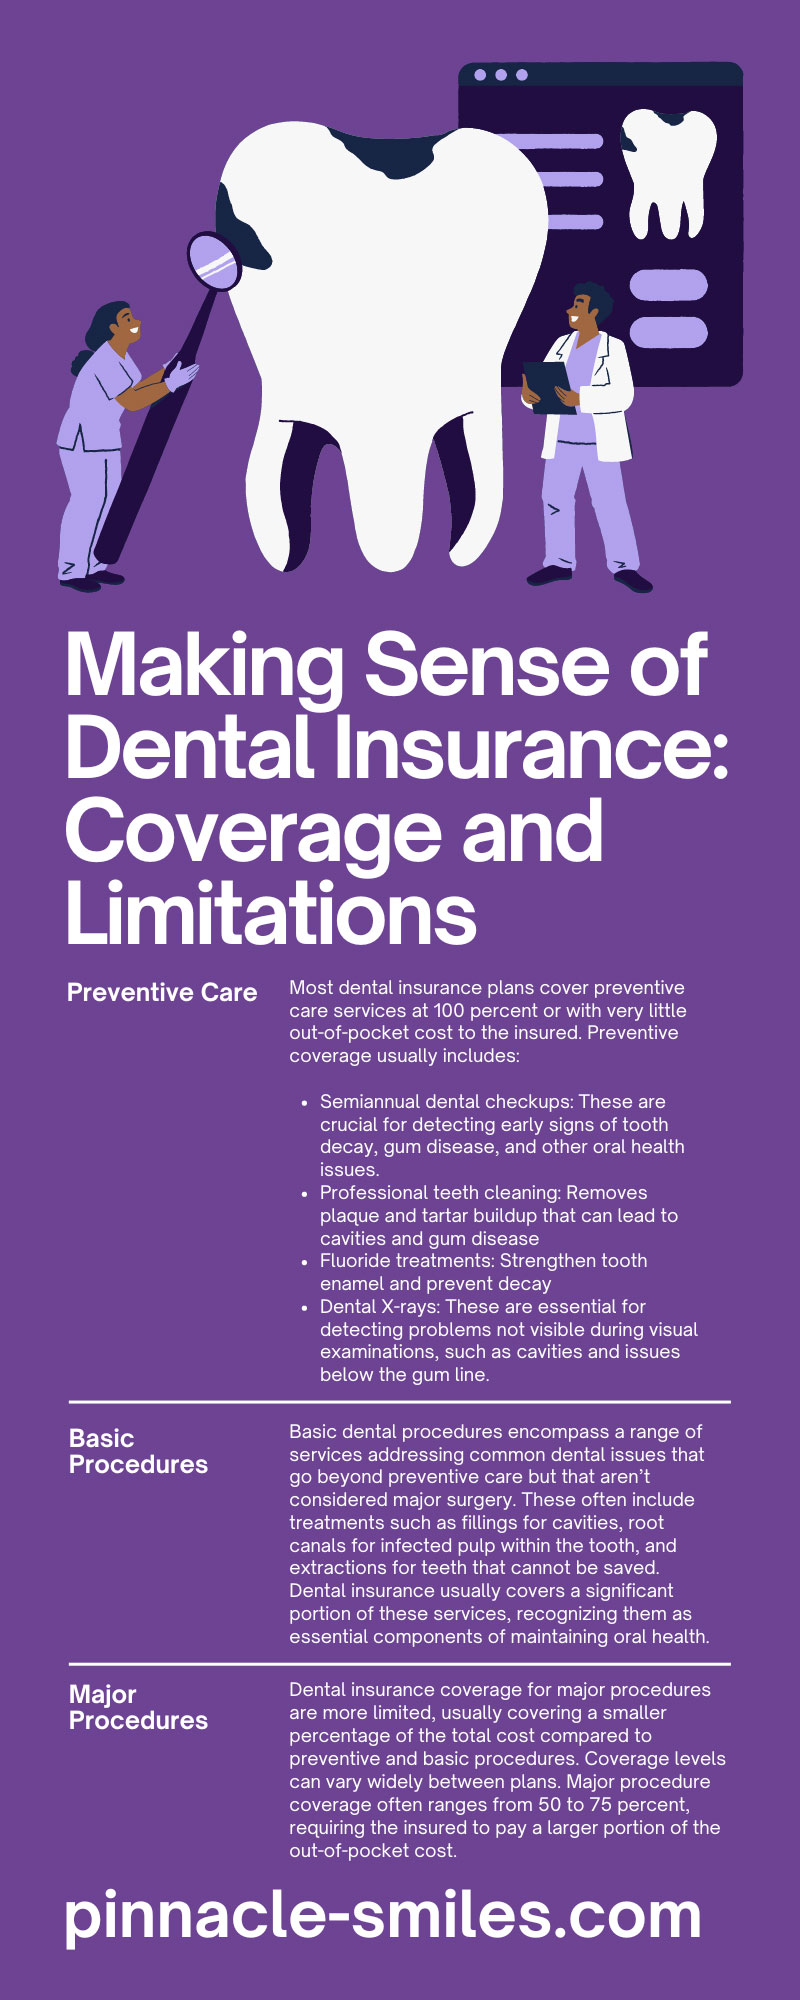 Making Sense of Dental Insurance: Coverage and Limitations